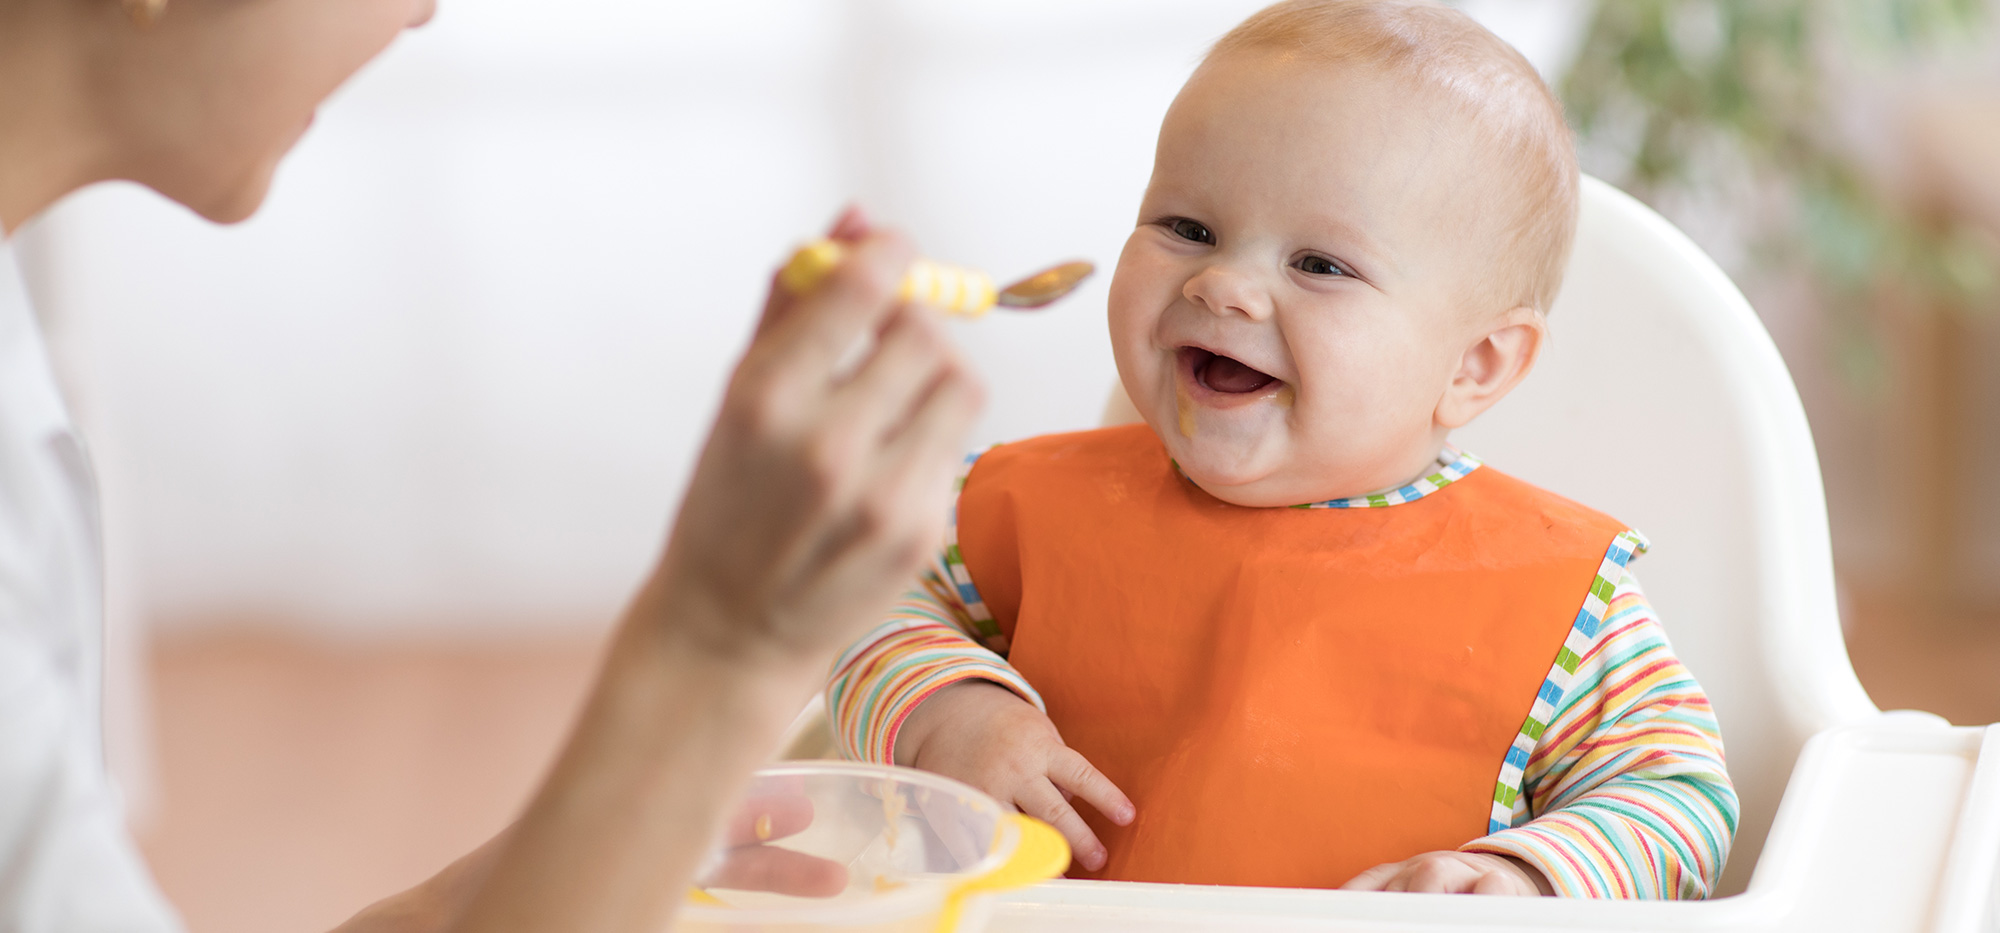 Nutrition for infants 6-9 months